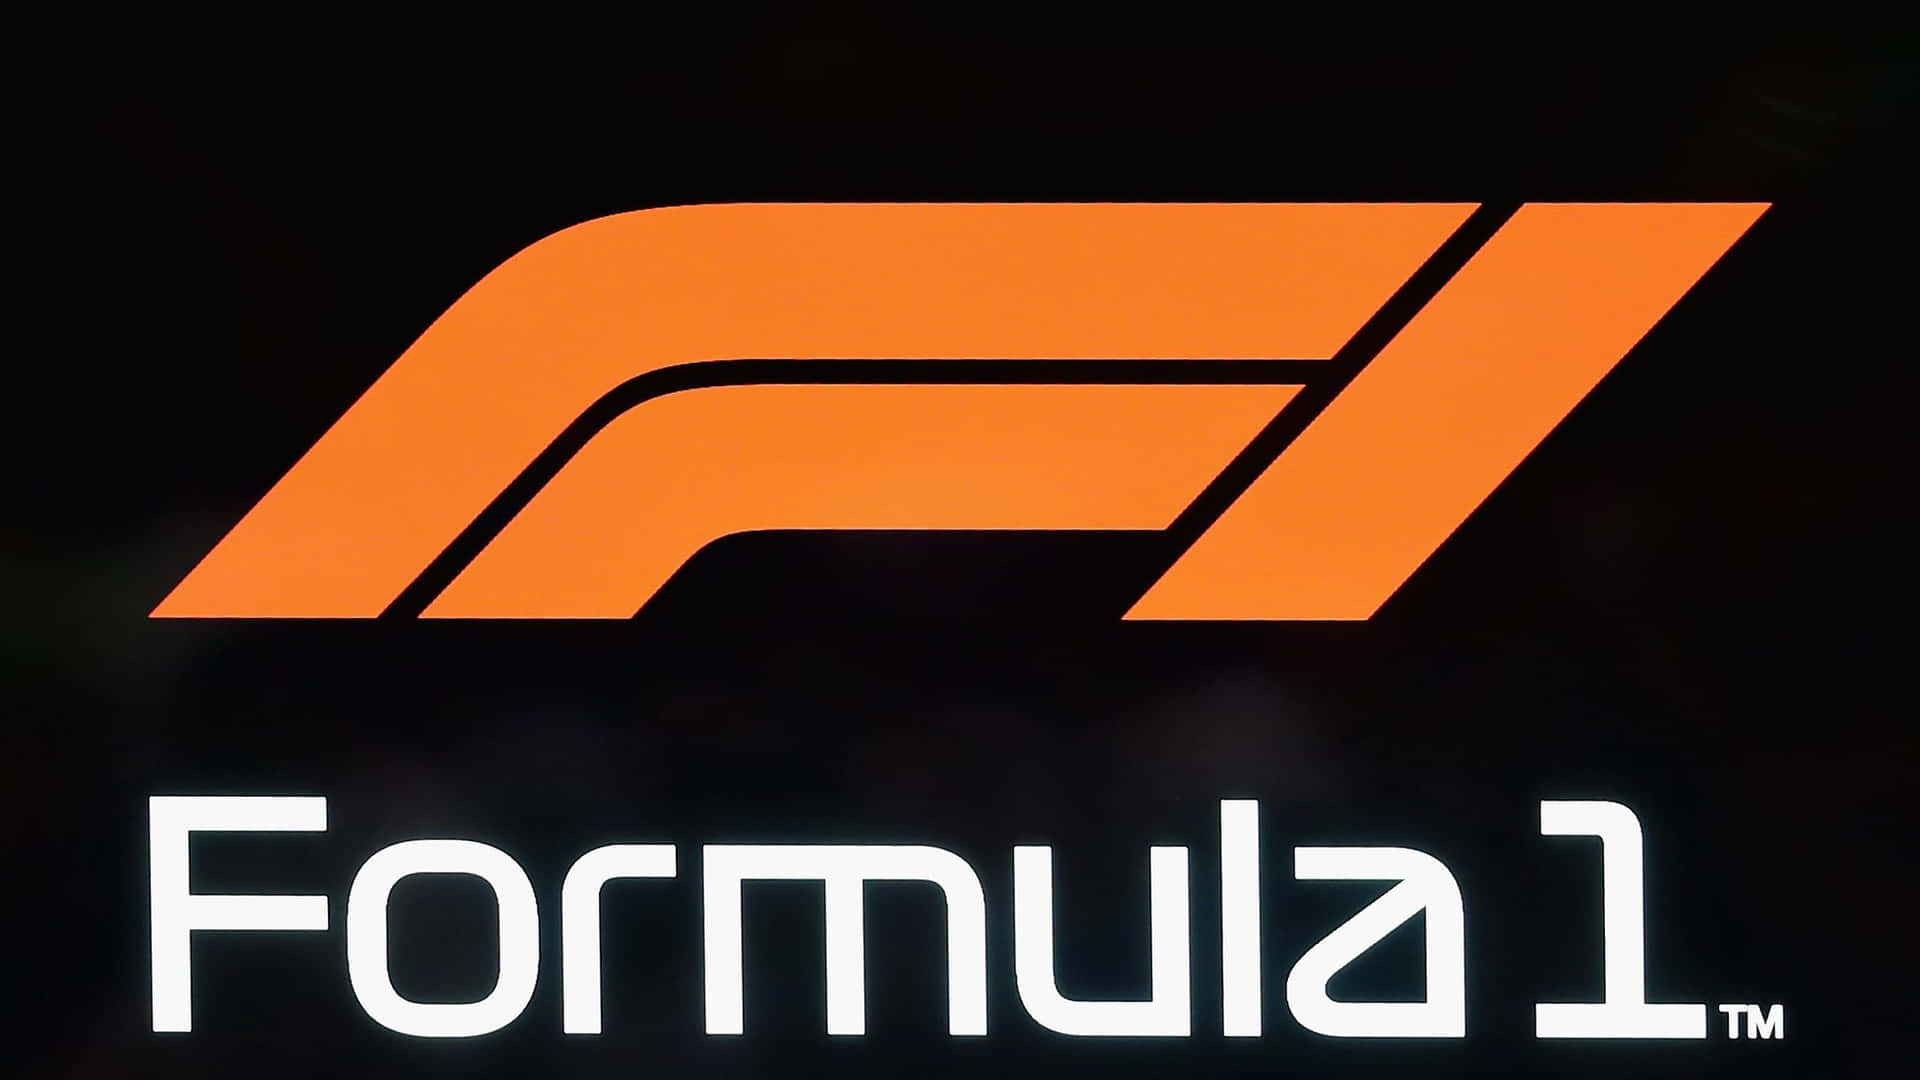 Formula 1 Logo With Orange And Black Letters